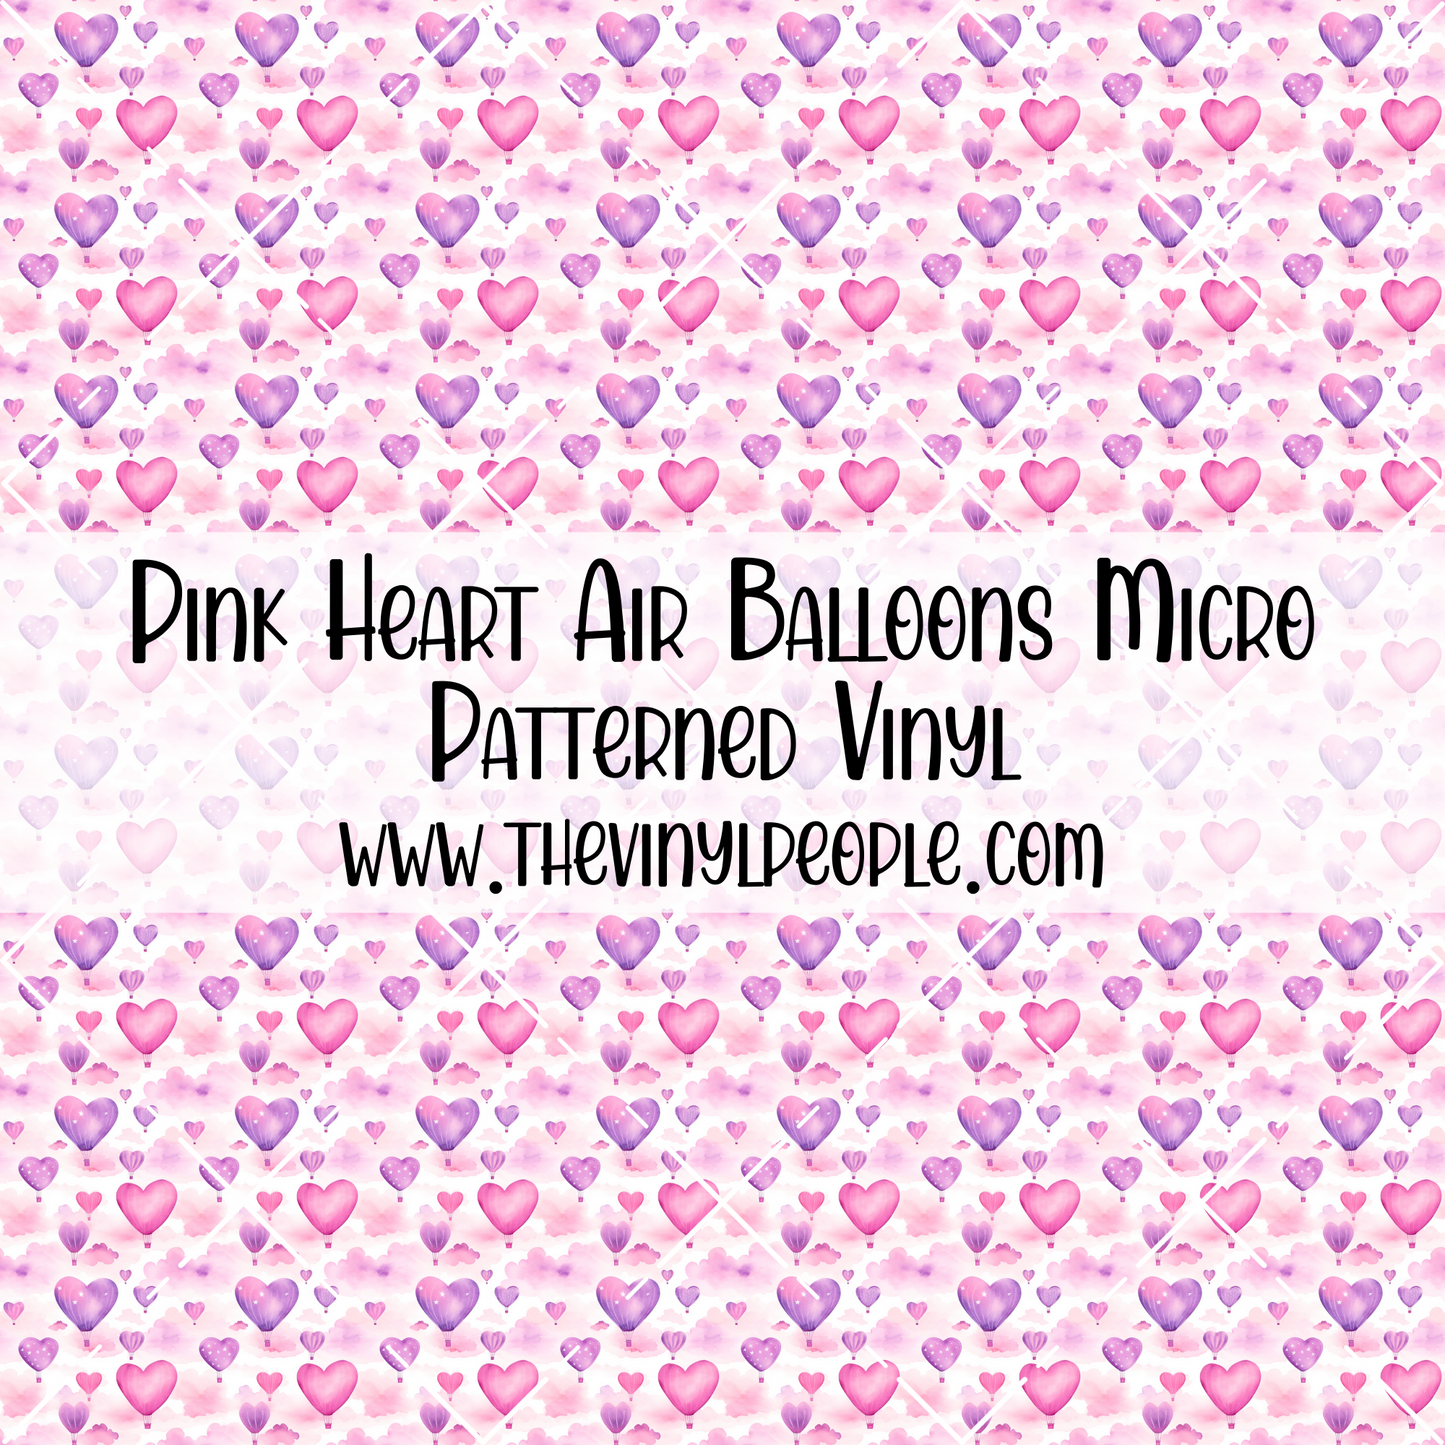 Pink Heart Air Balloons Patterned Vinyl